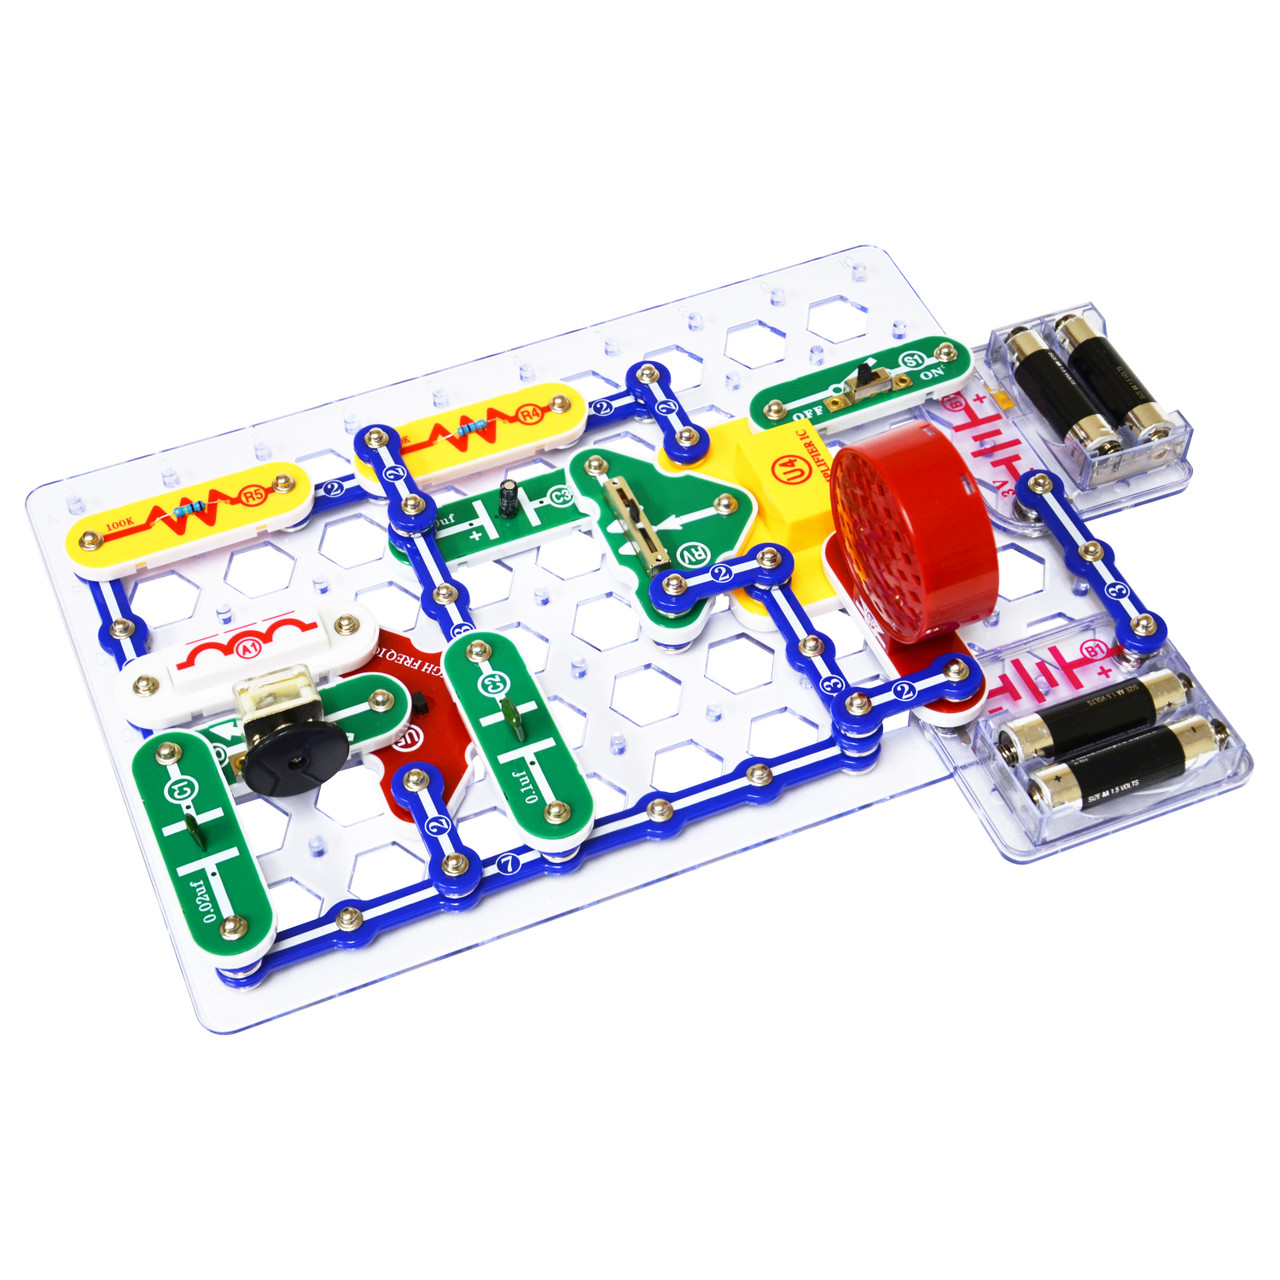 Electronic Snap Circuits® Kit - Model SC-300